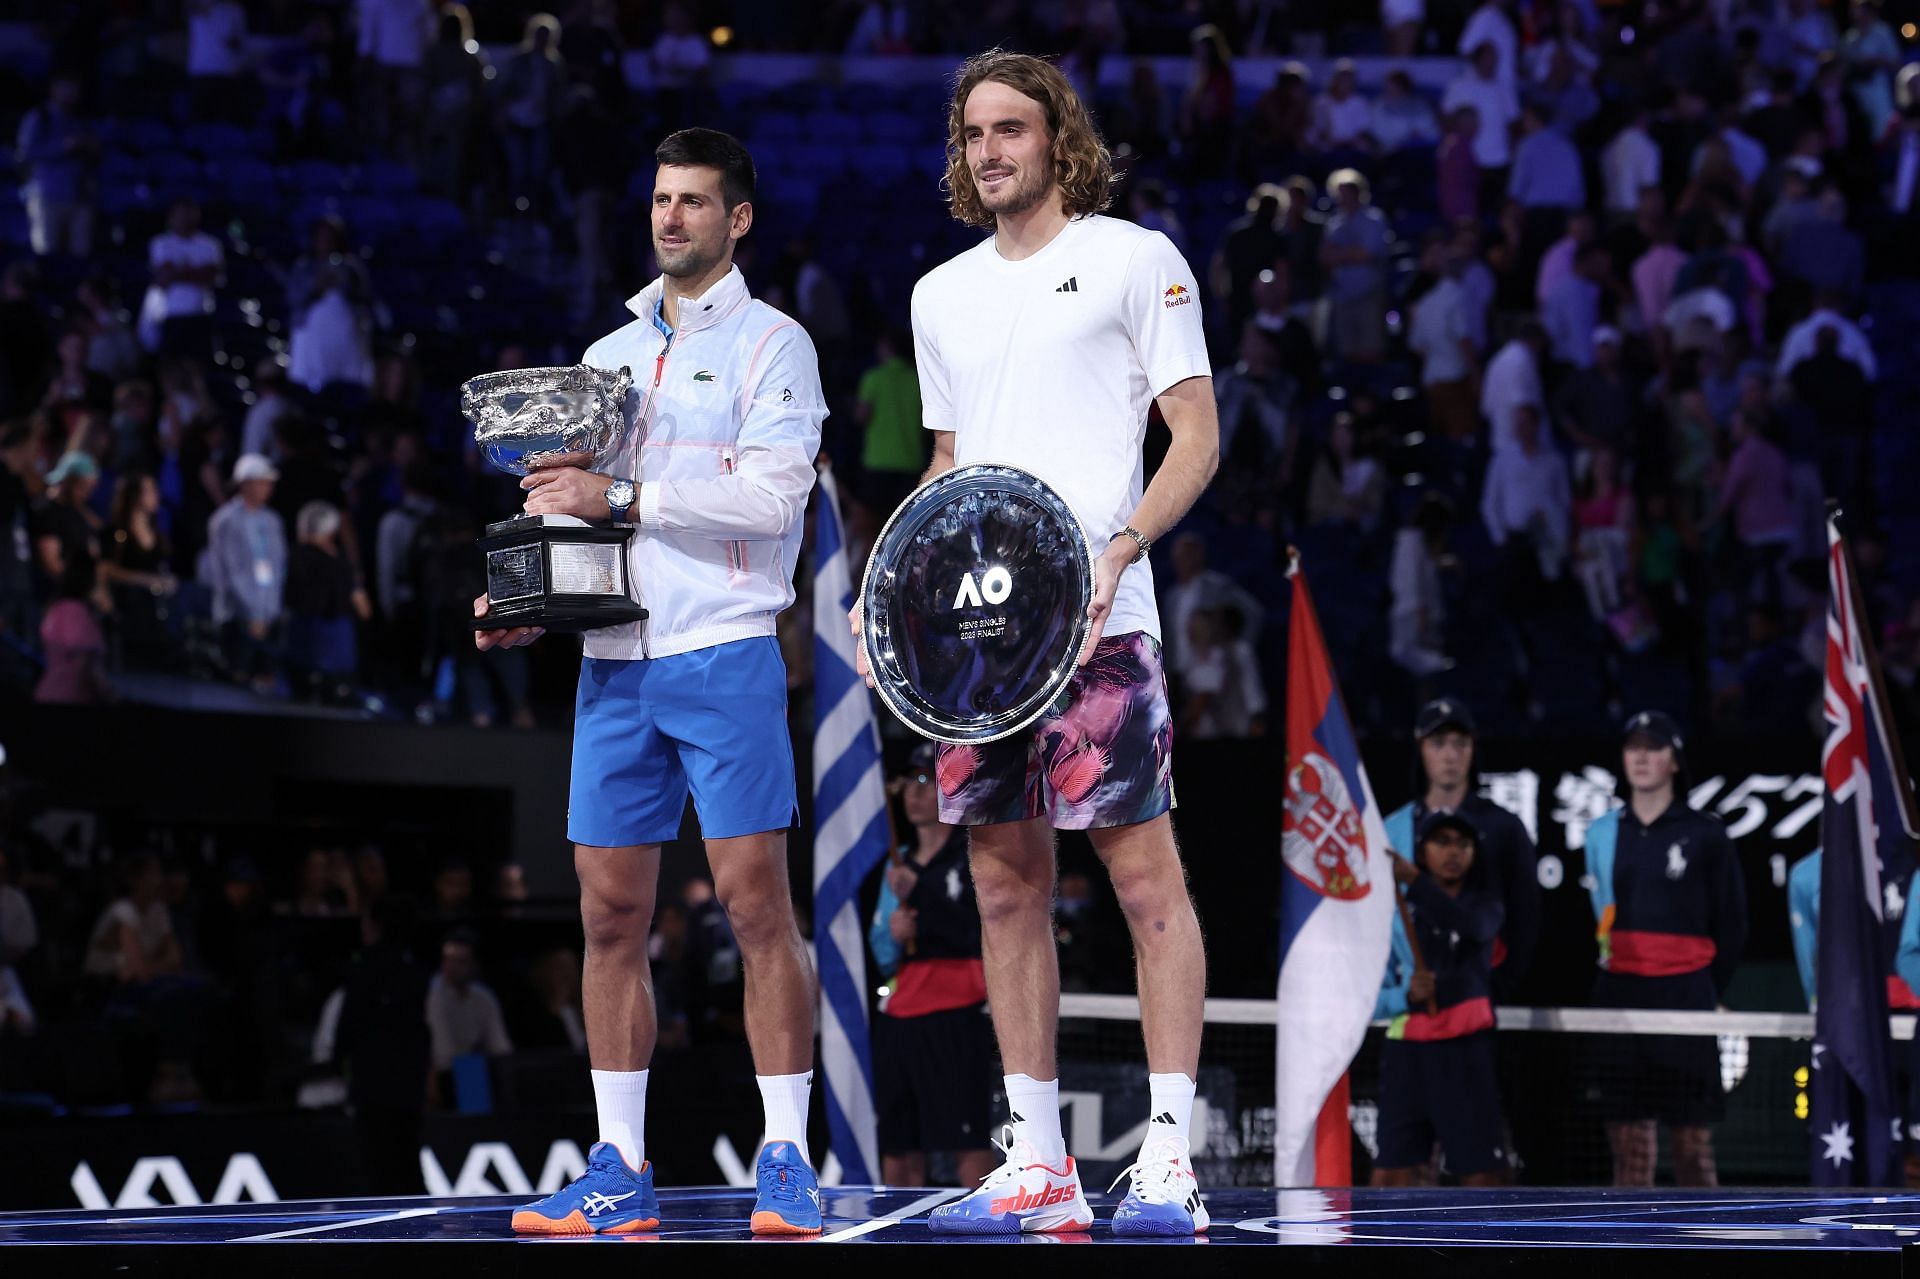 Novak Djokovic and Stefanos Tsitsipas posing with their respective trophies